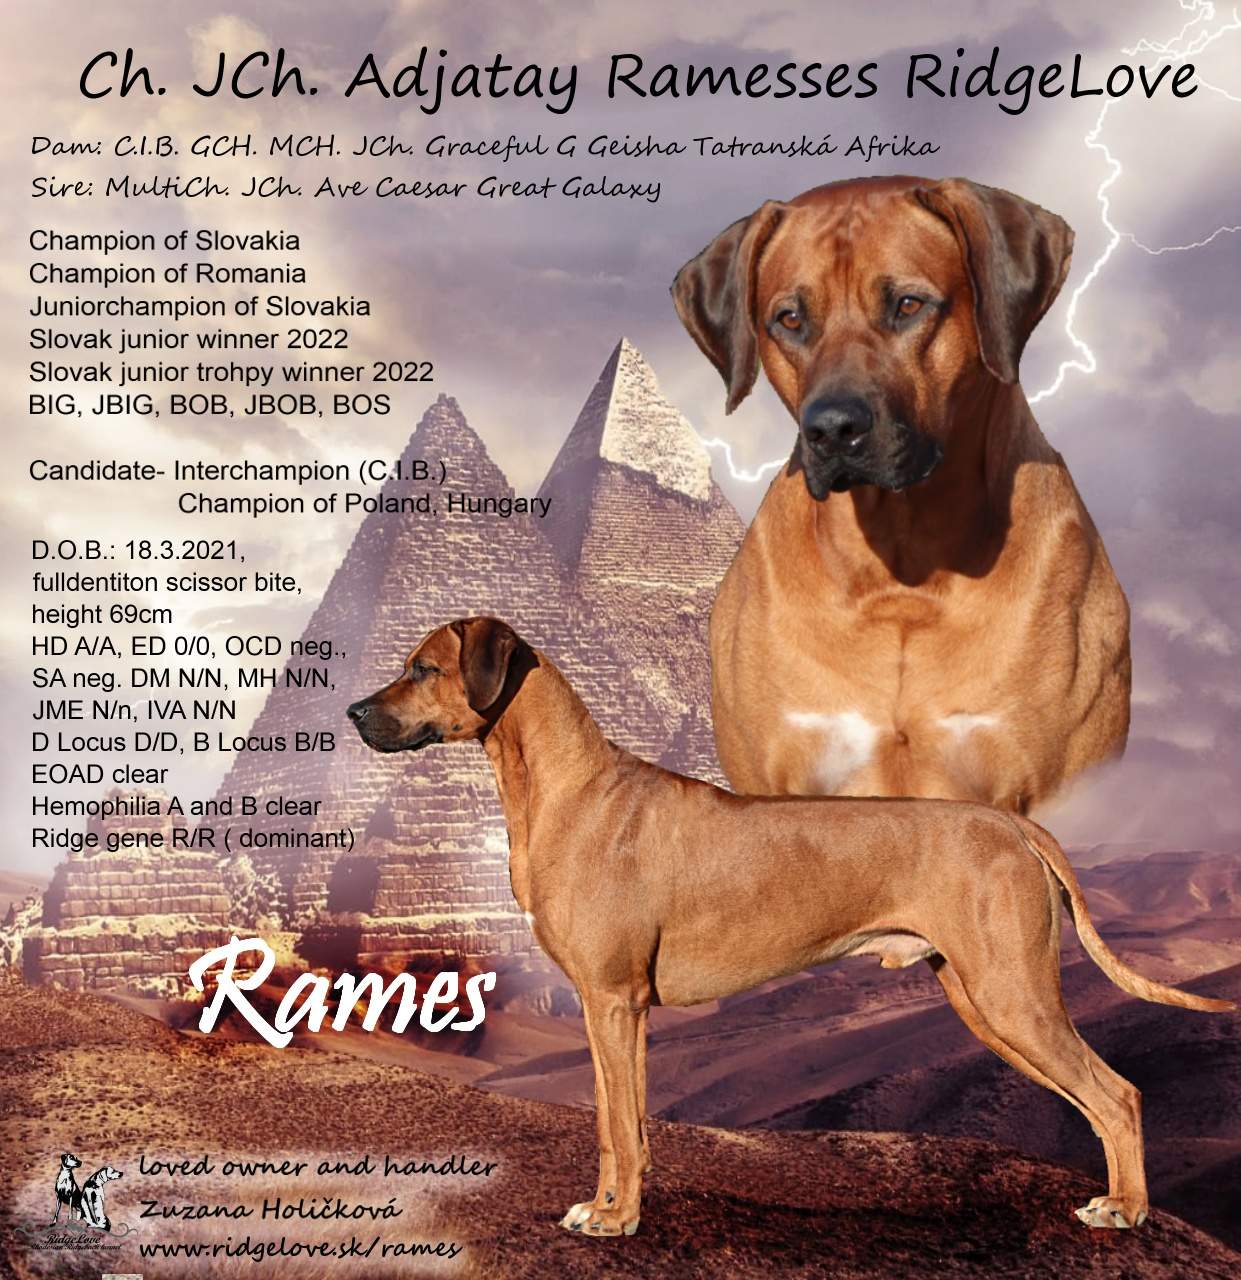 Adjatay Ramesses RidgeLove, rhodesian ridgeback stud dog, ridgeback stud dogs, stud dogs rhodesian ridgeback, Adjatay Ramesses, Ave Caesar Great Galaxy, Ridgeback Adjatay Ramesses RidgeLove